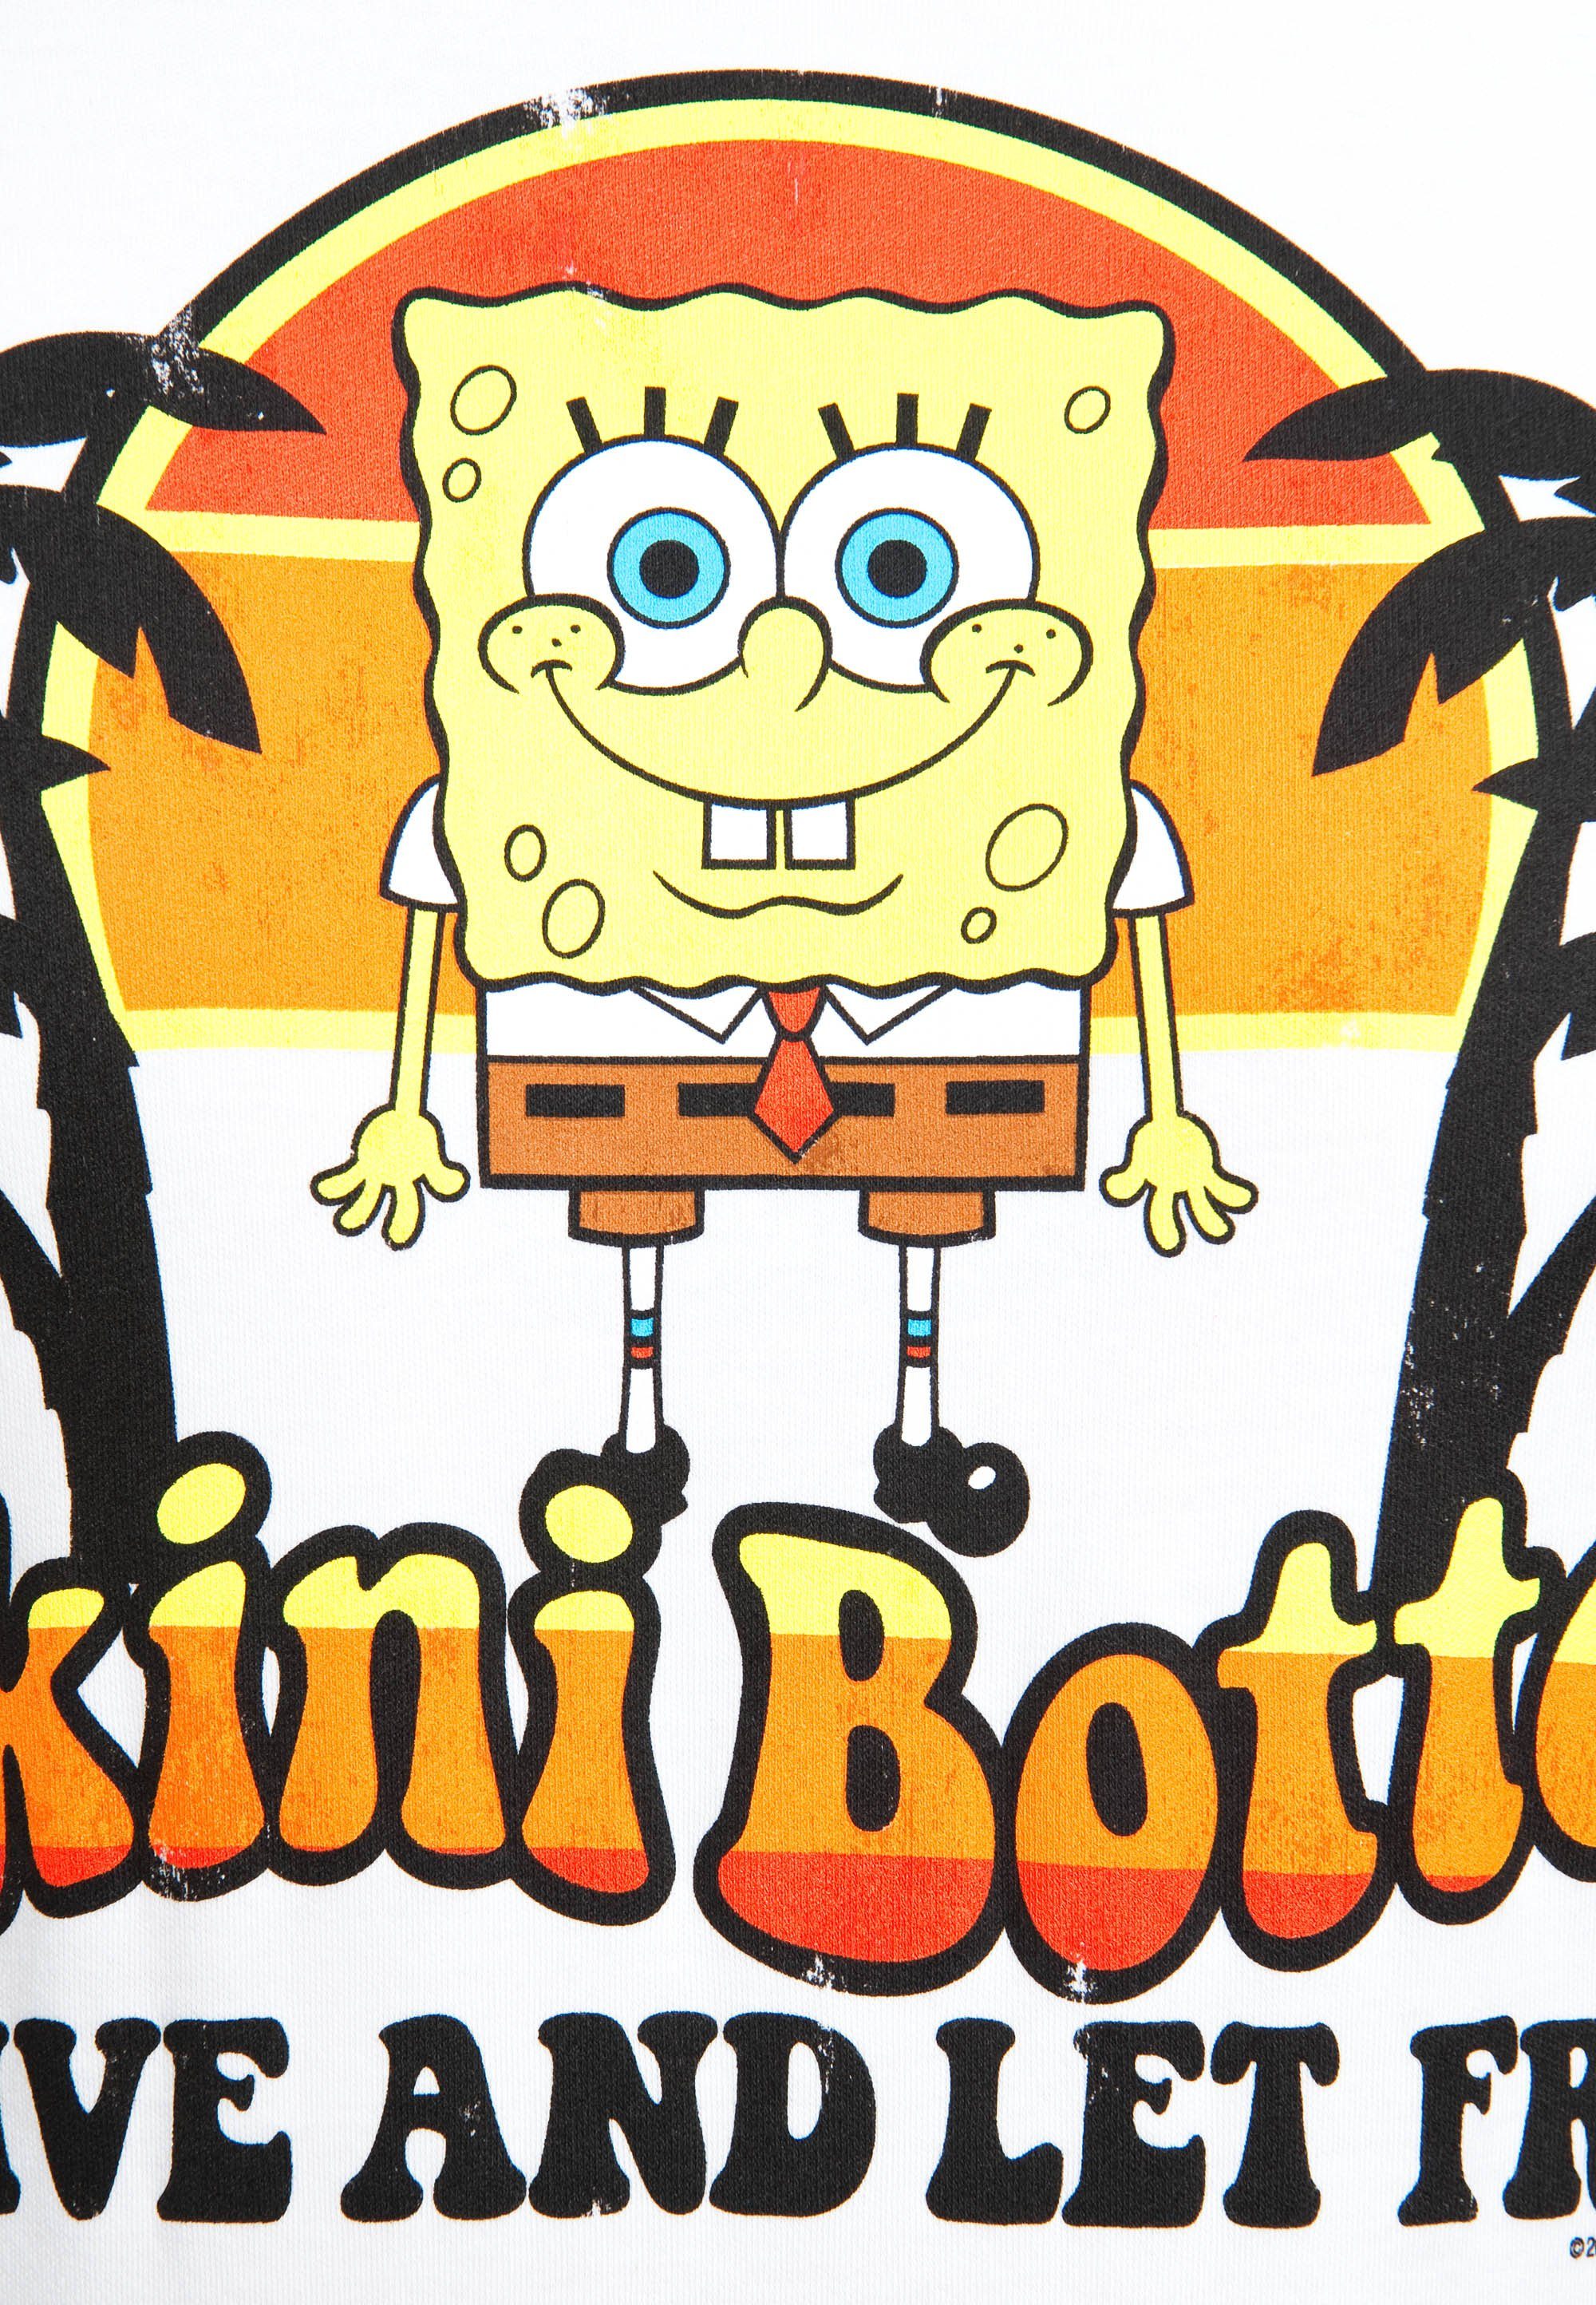 Bottom T-Shirt - Bikini witzigem Spongebob-Print mit LOGOSHIRT Spongebob